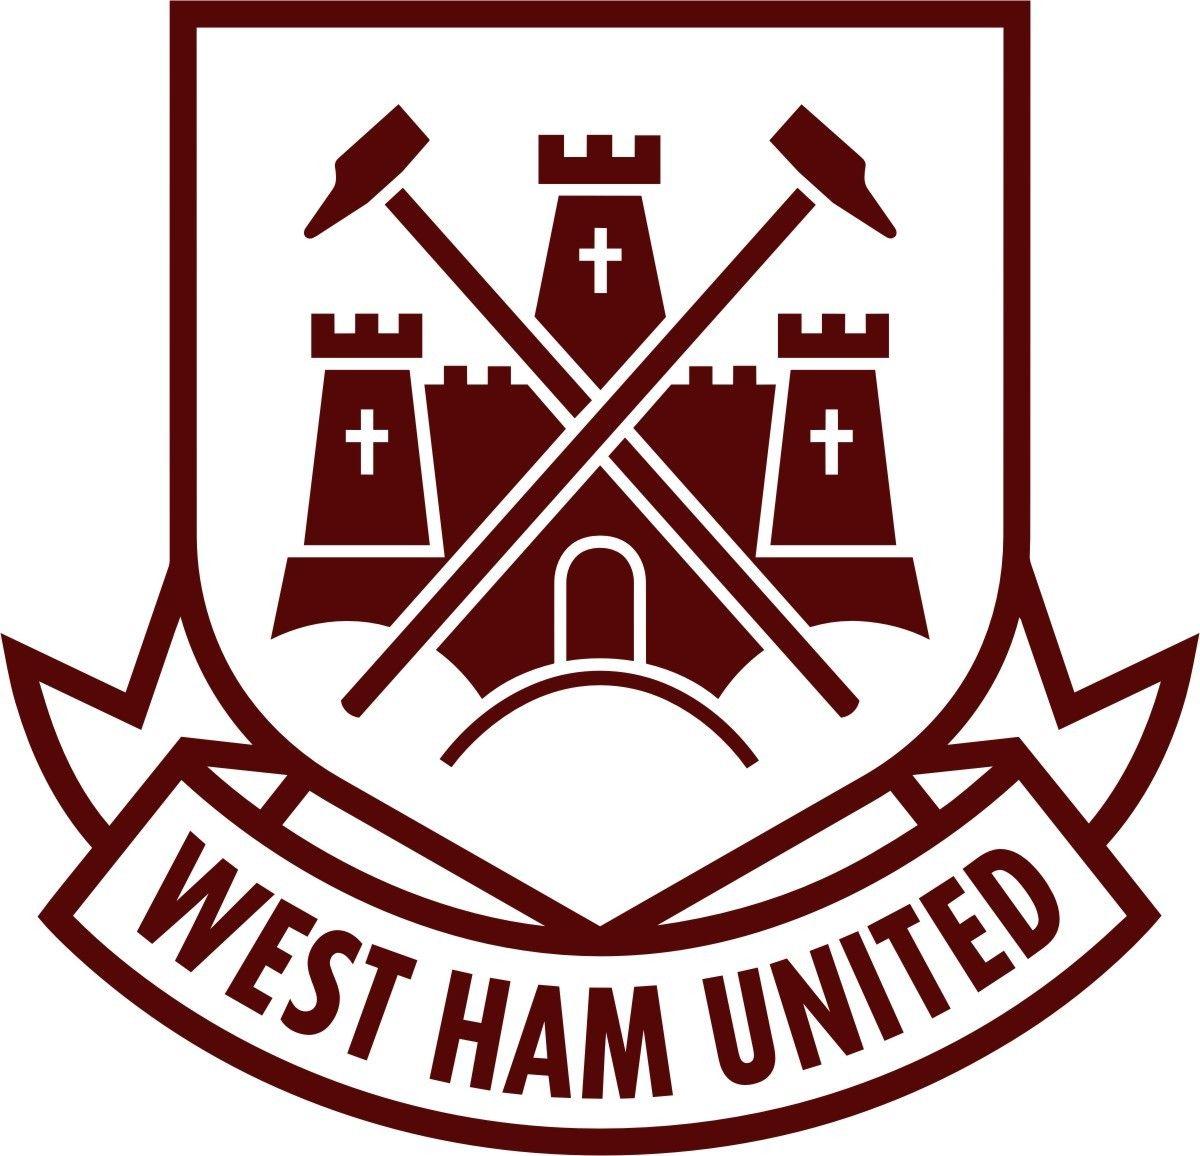 West Ham United Logo - MATCH PREVIEW: West Ham United, St James' Park, 24 Aug KO: 3pm